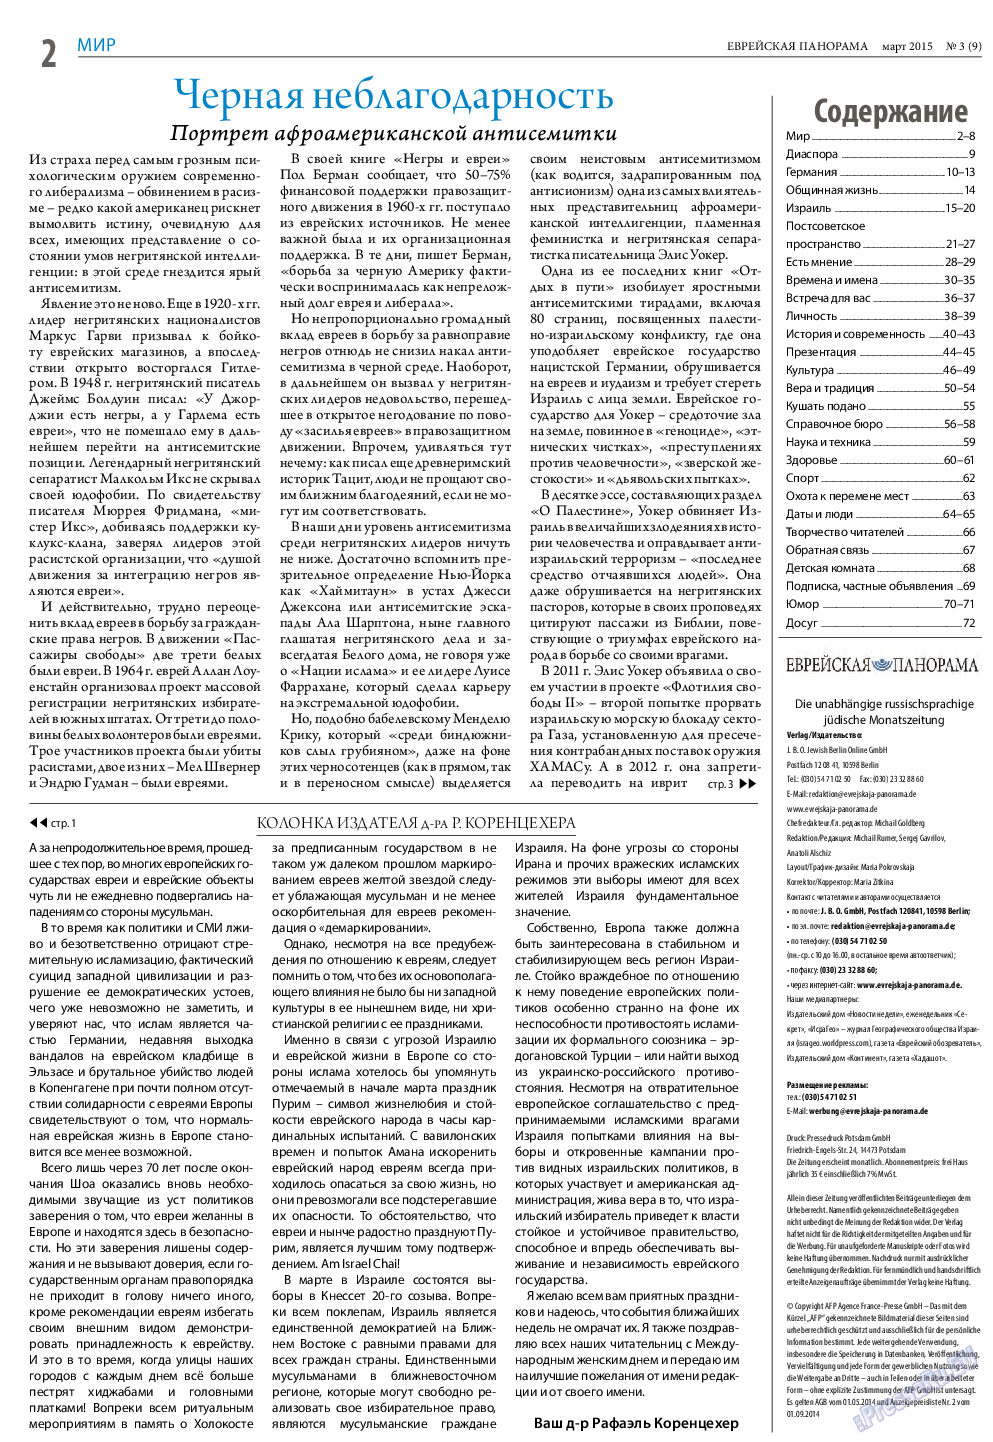 Еврейская панорама, газета. 2015 №3 стр.2